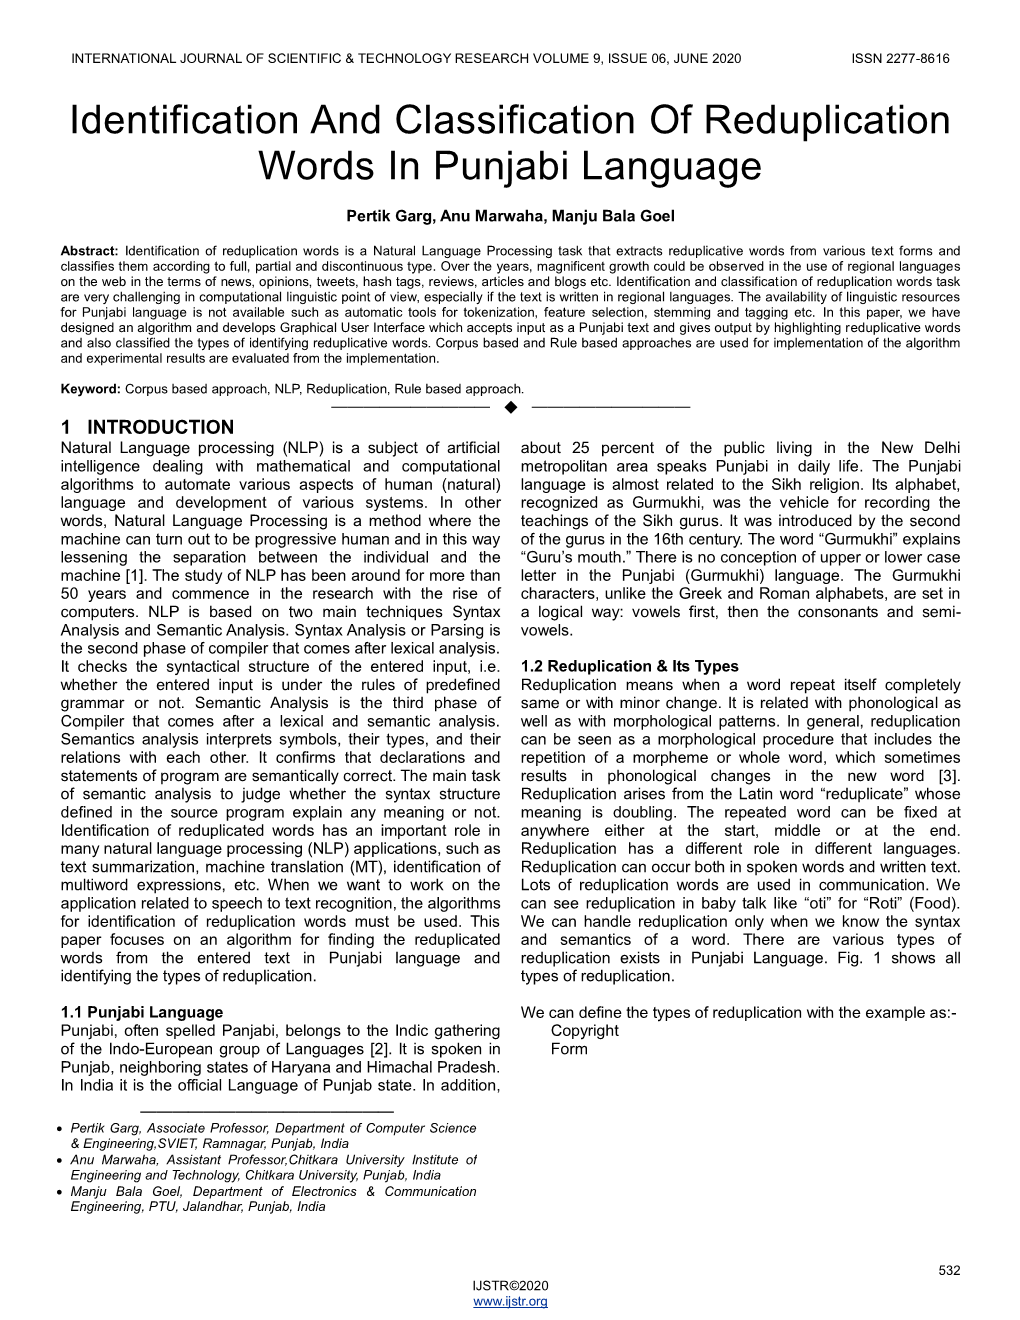 Identification and Classification of Reduplication Words in Punjabi Language